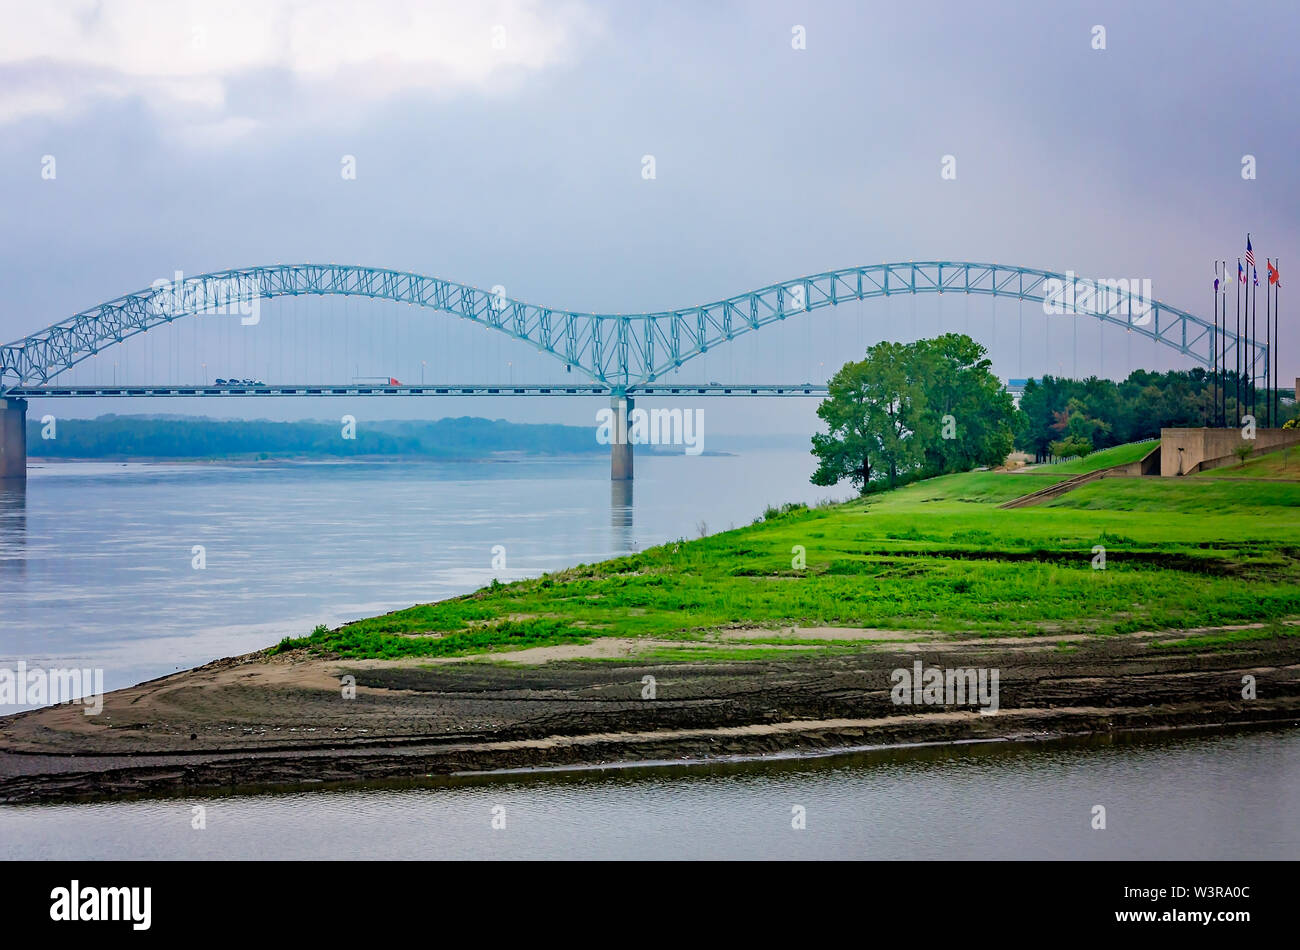 The Hernando de Soto Bridge, also called the M Bridge, is pictured, Sept. 10, 2015, in Memphis, Tennessee. Stock Photo